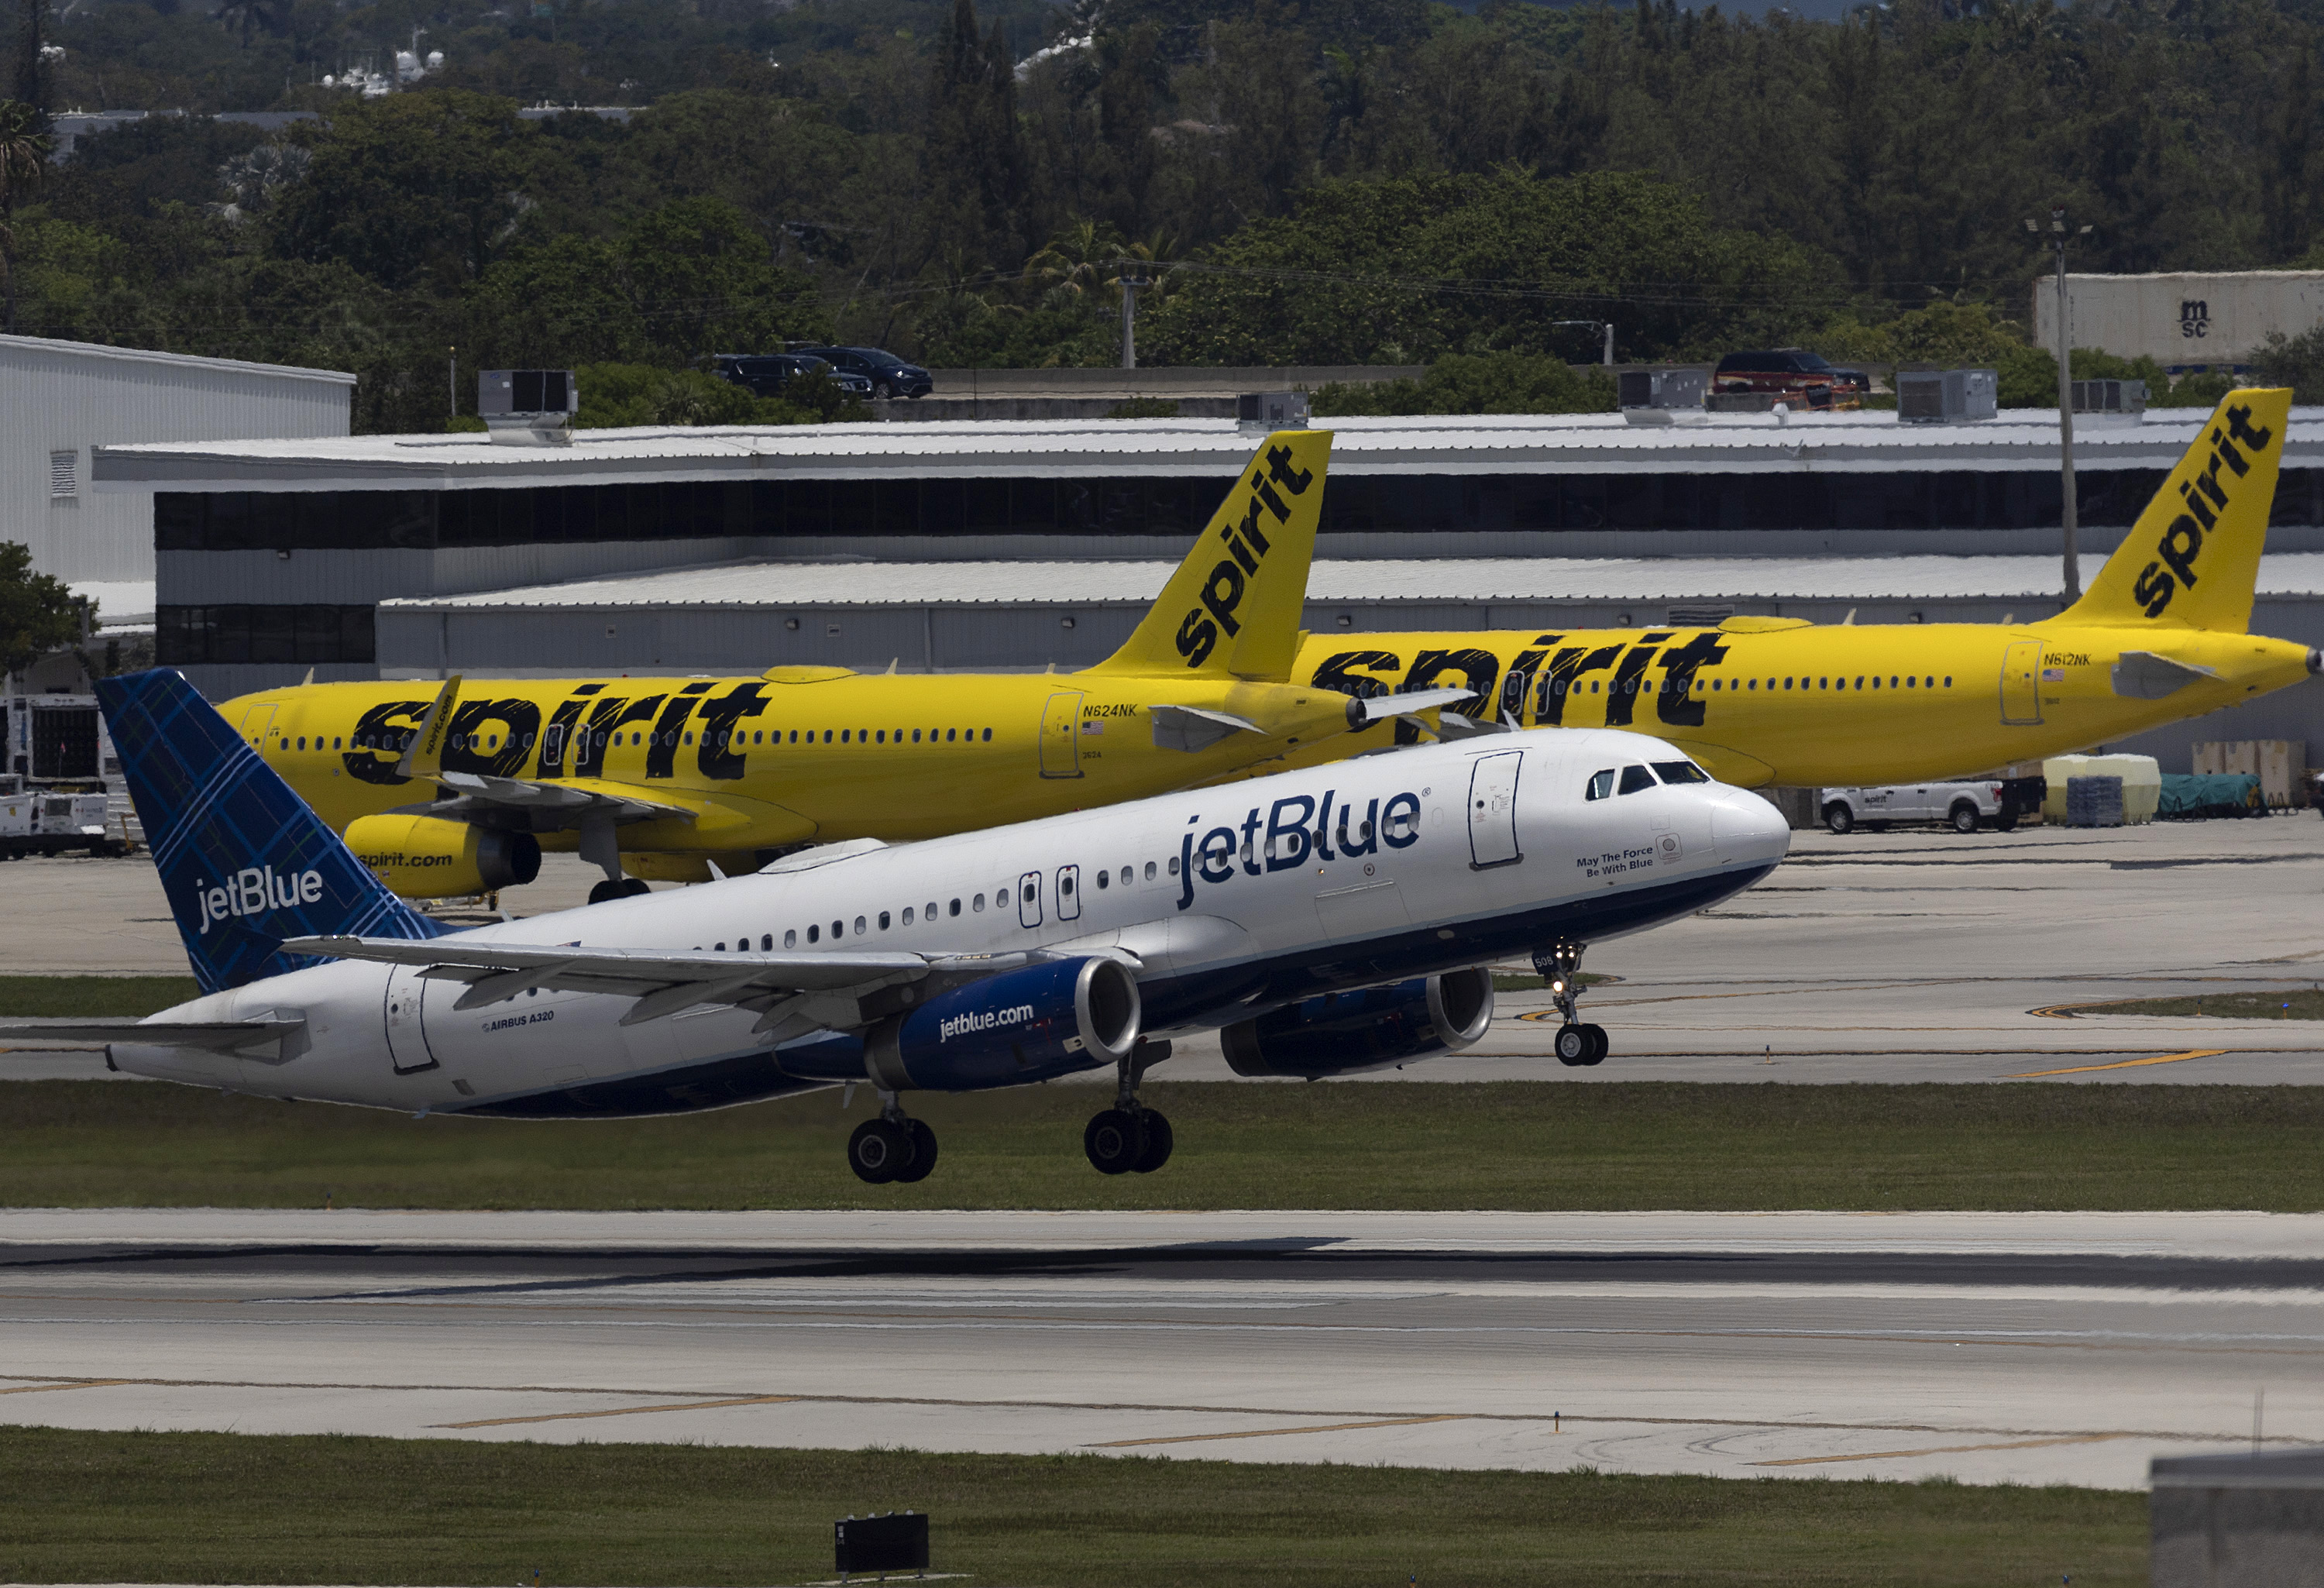 A JetBlue plane takes off near Spirit planes. 